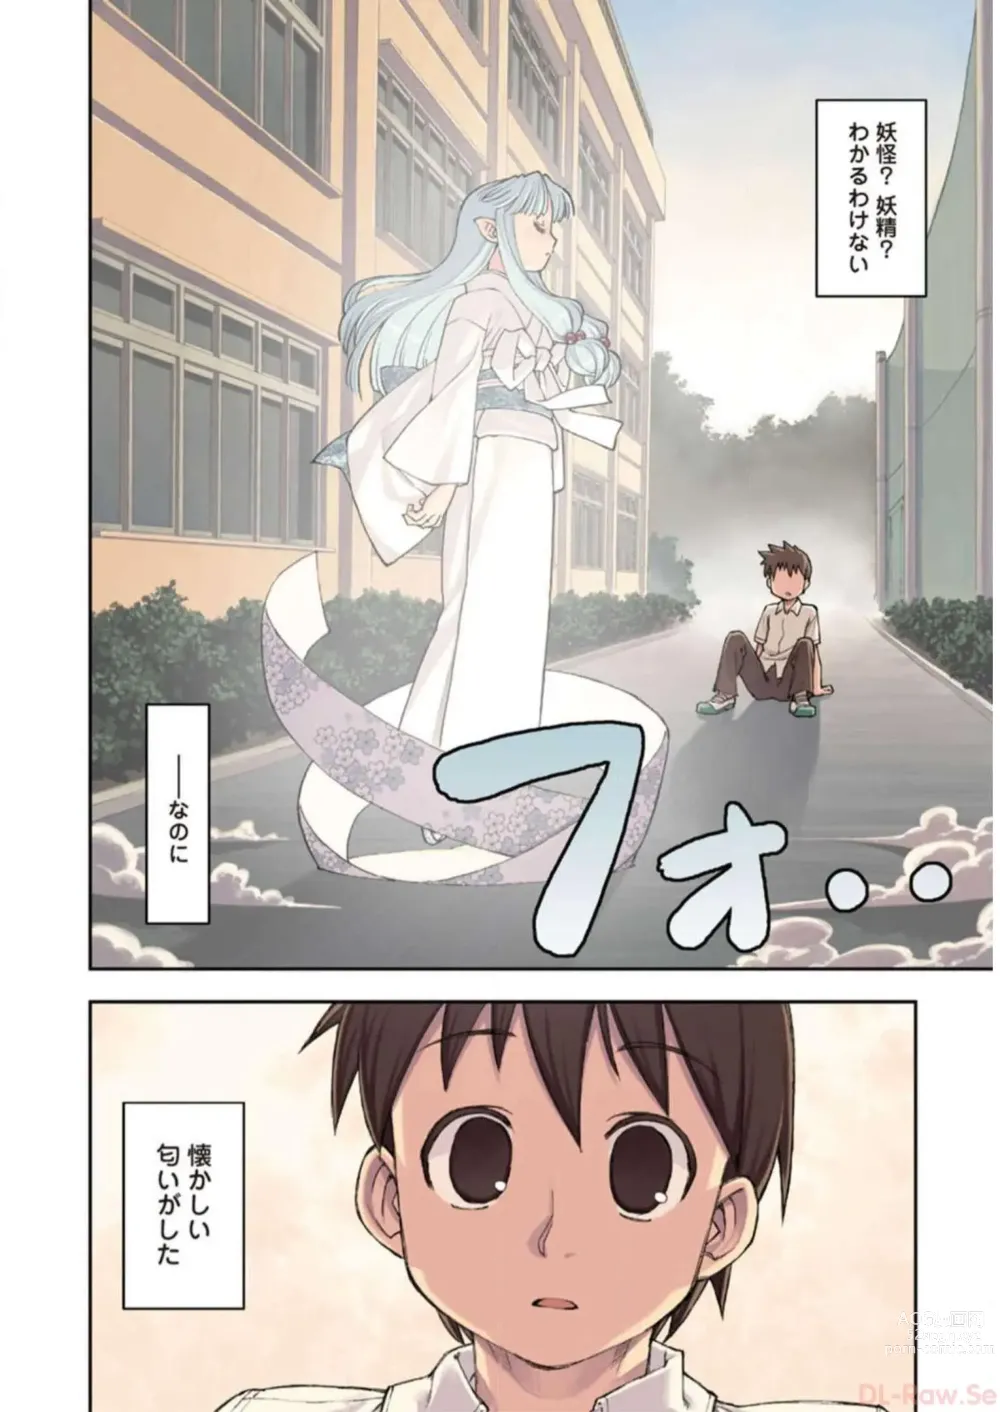 Page 6 of manga Tsugumomo Digital Colored Comics V1